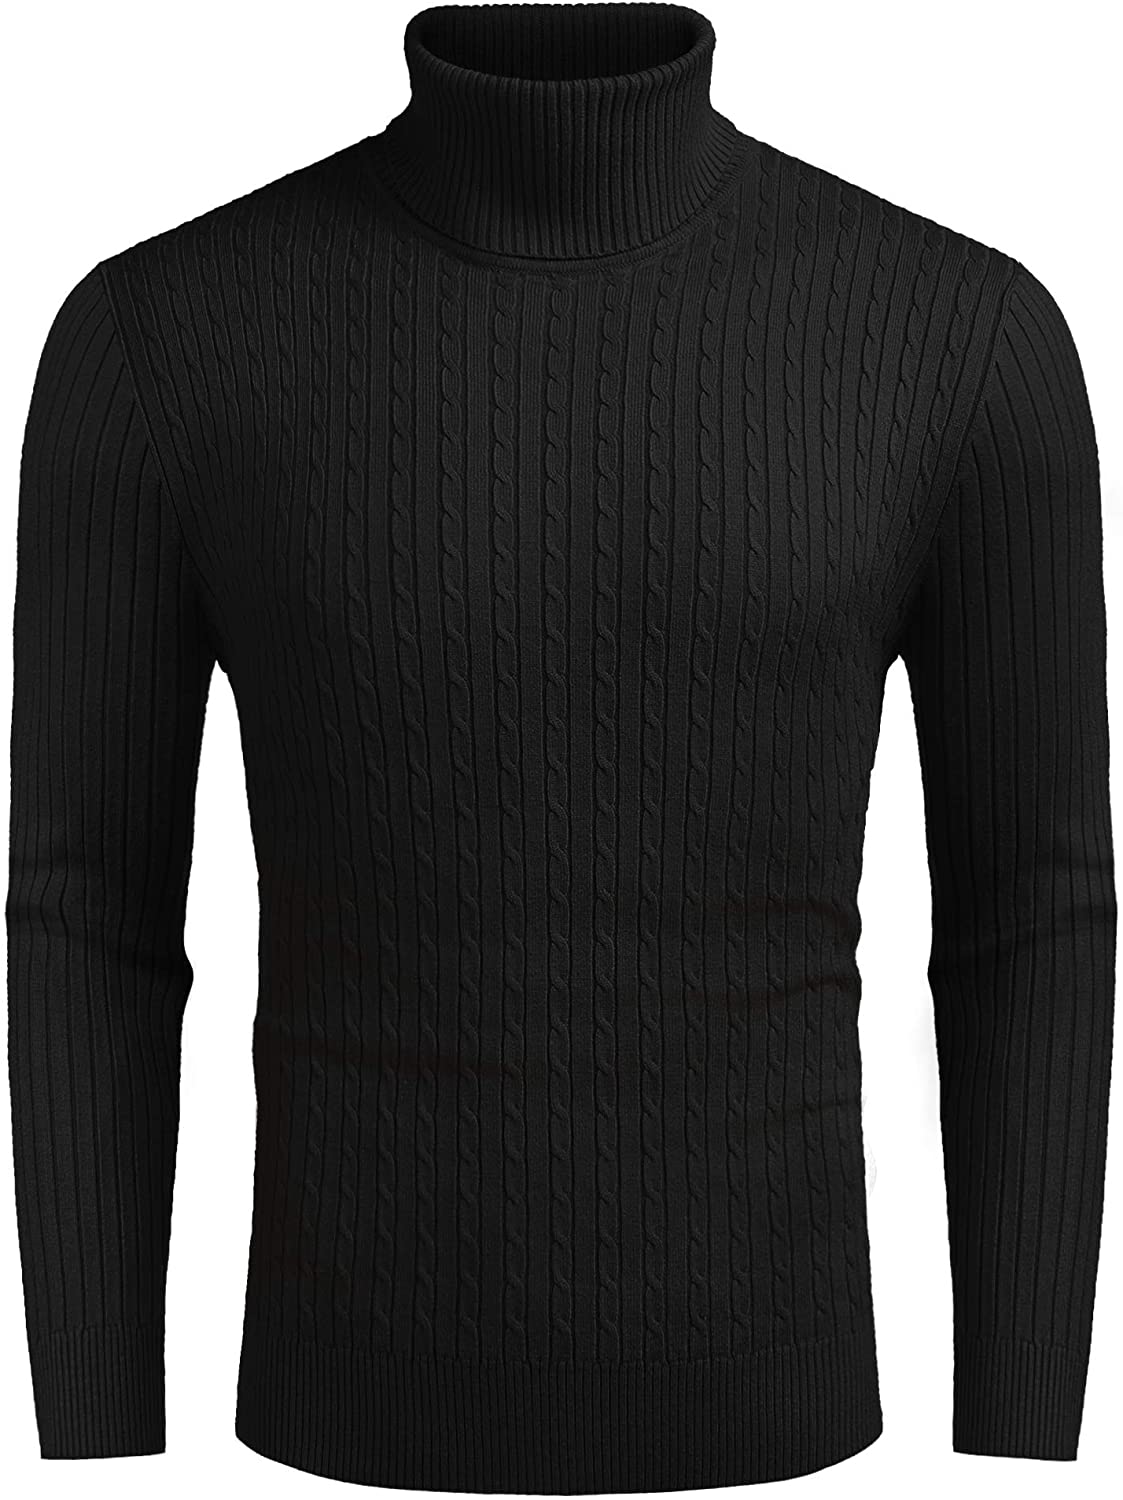 COOFANDY Men's Casual Slim Fit Turtleneck Sweater Twist Patterned ...